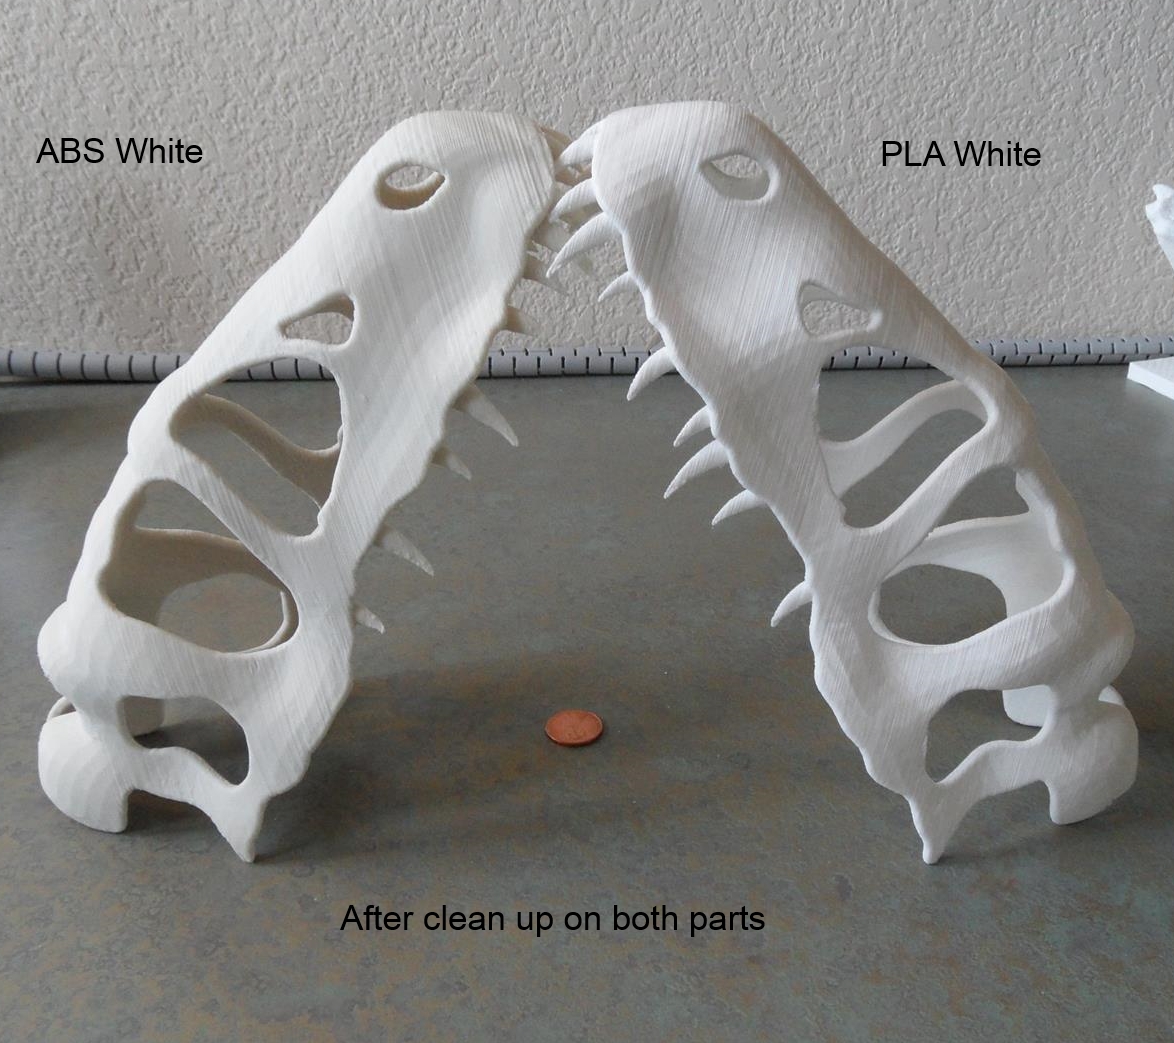 CubeX 3D Printing Blog: PLA vs. ABS printing